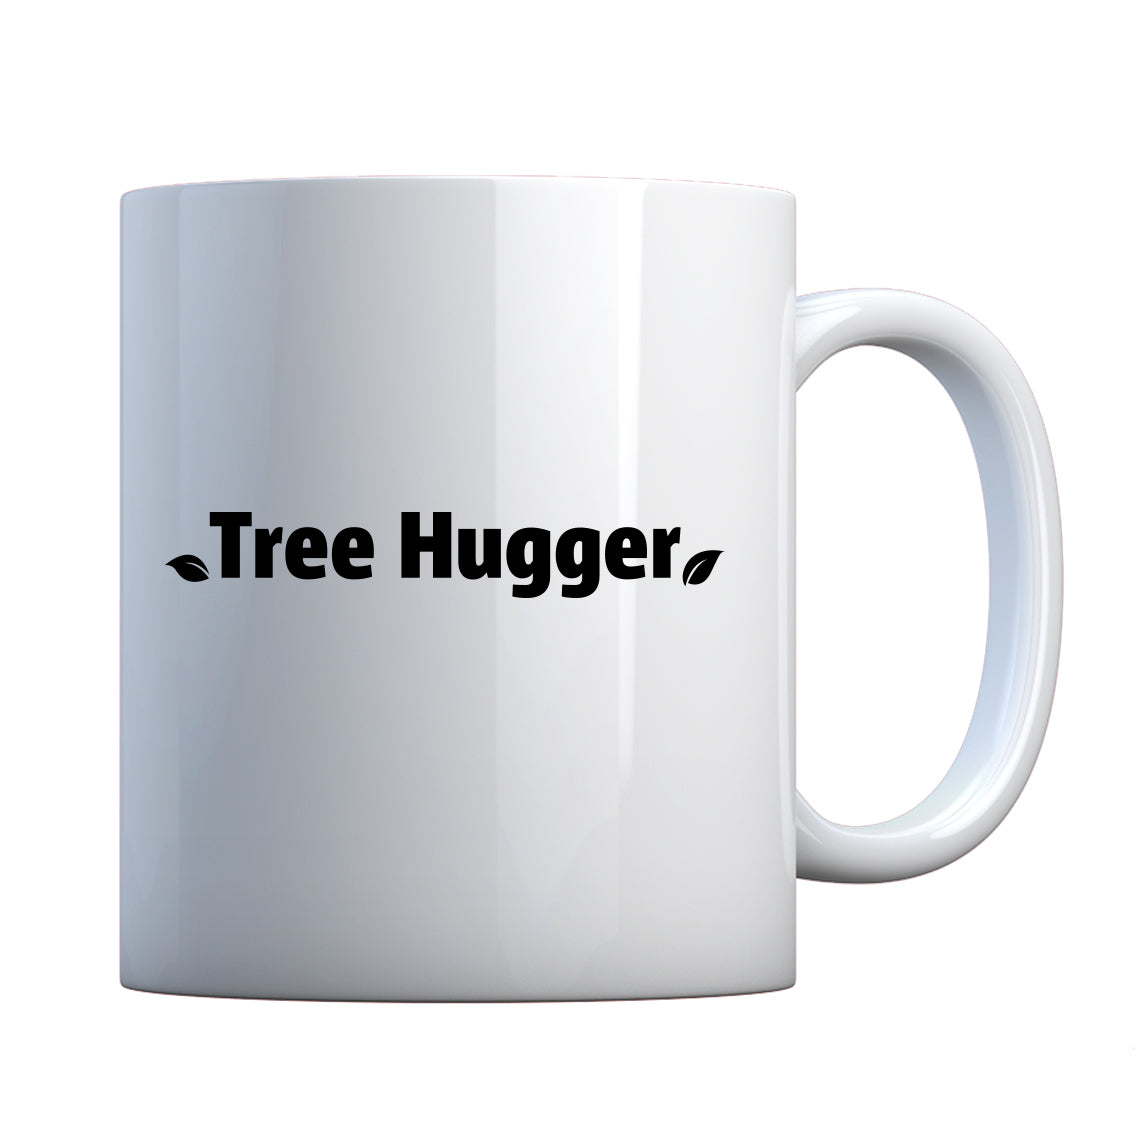 Tree Hugger Ceramic Gift Mug